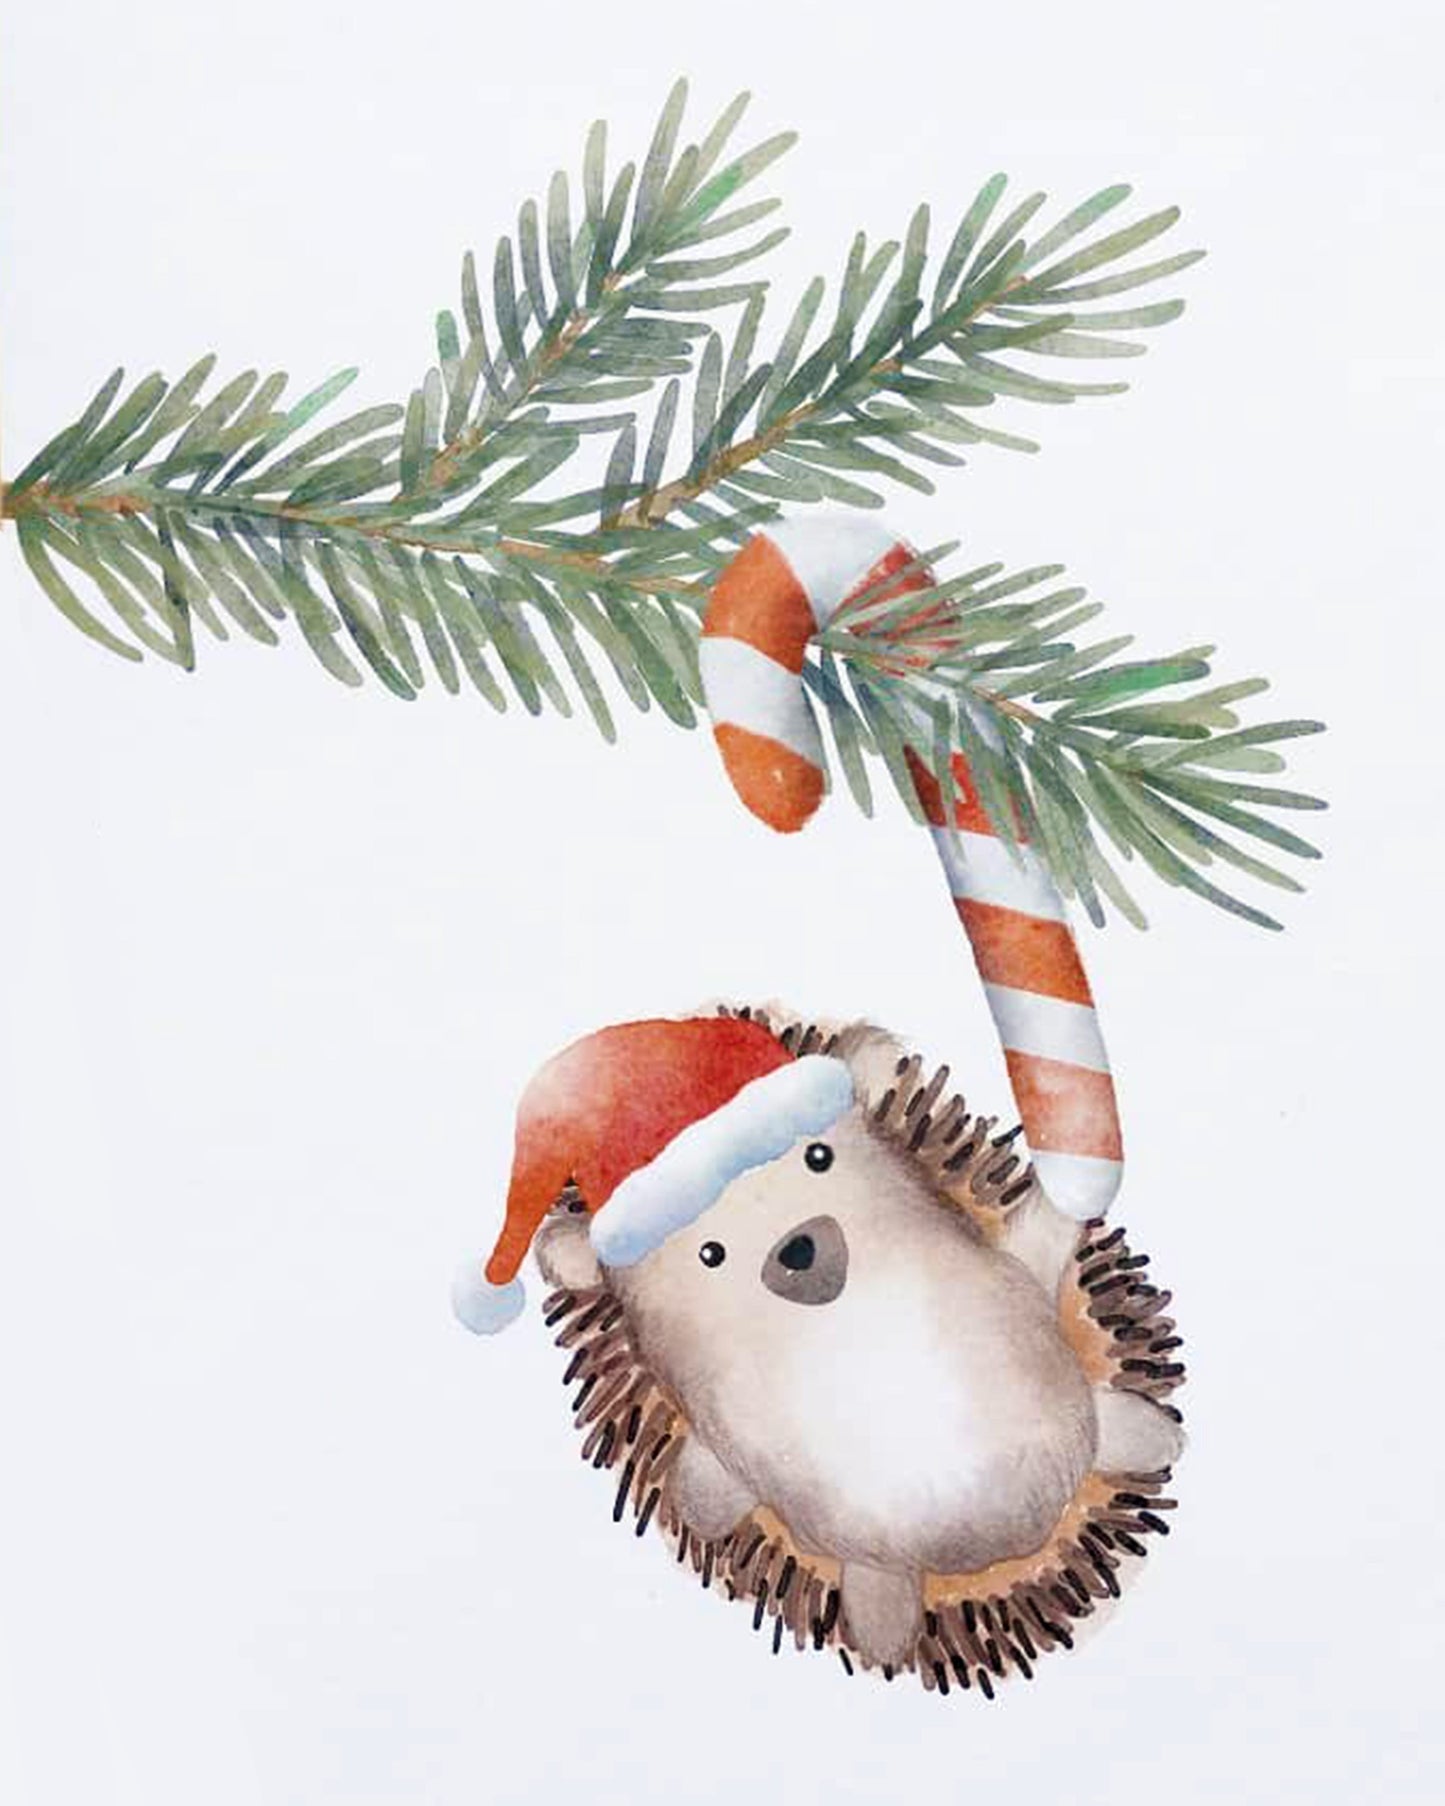 Hedgehog In Christmas Mood By Justyna Filipiak